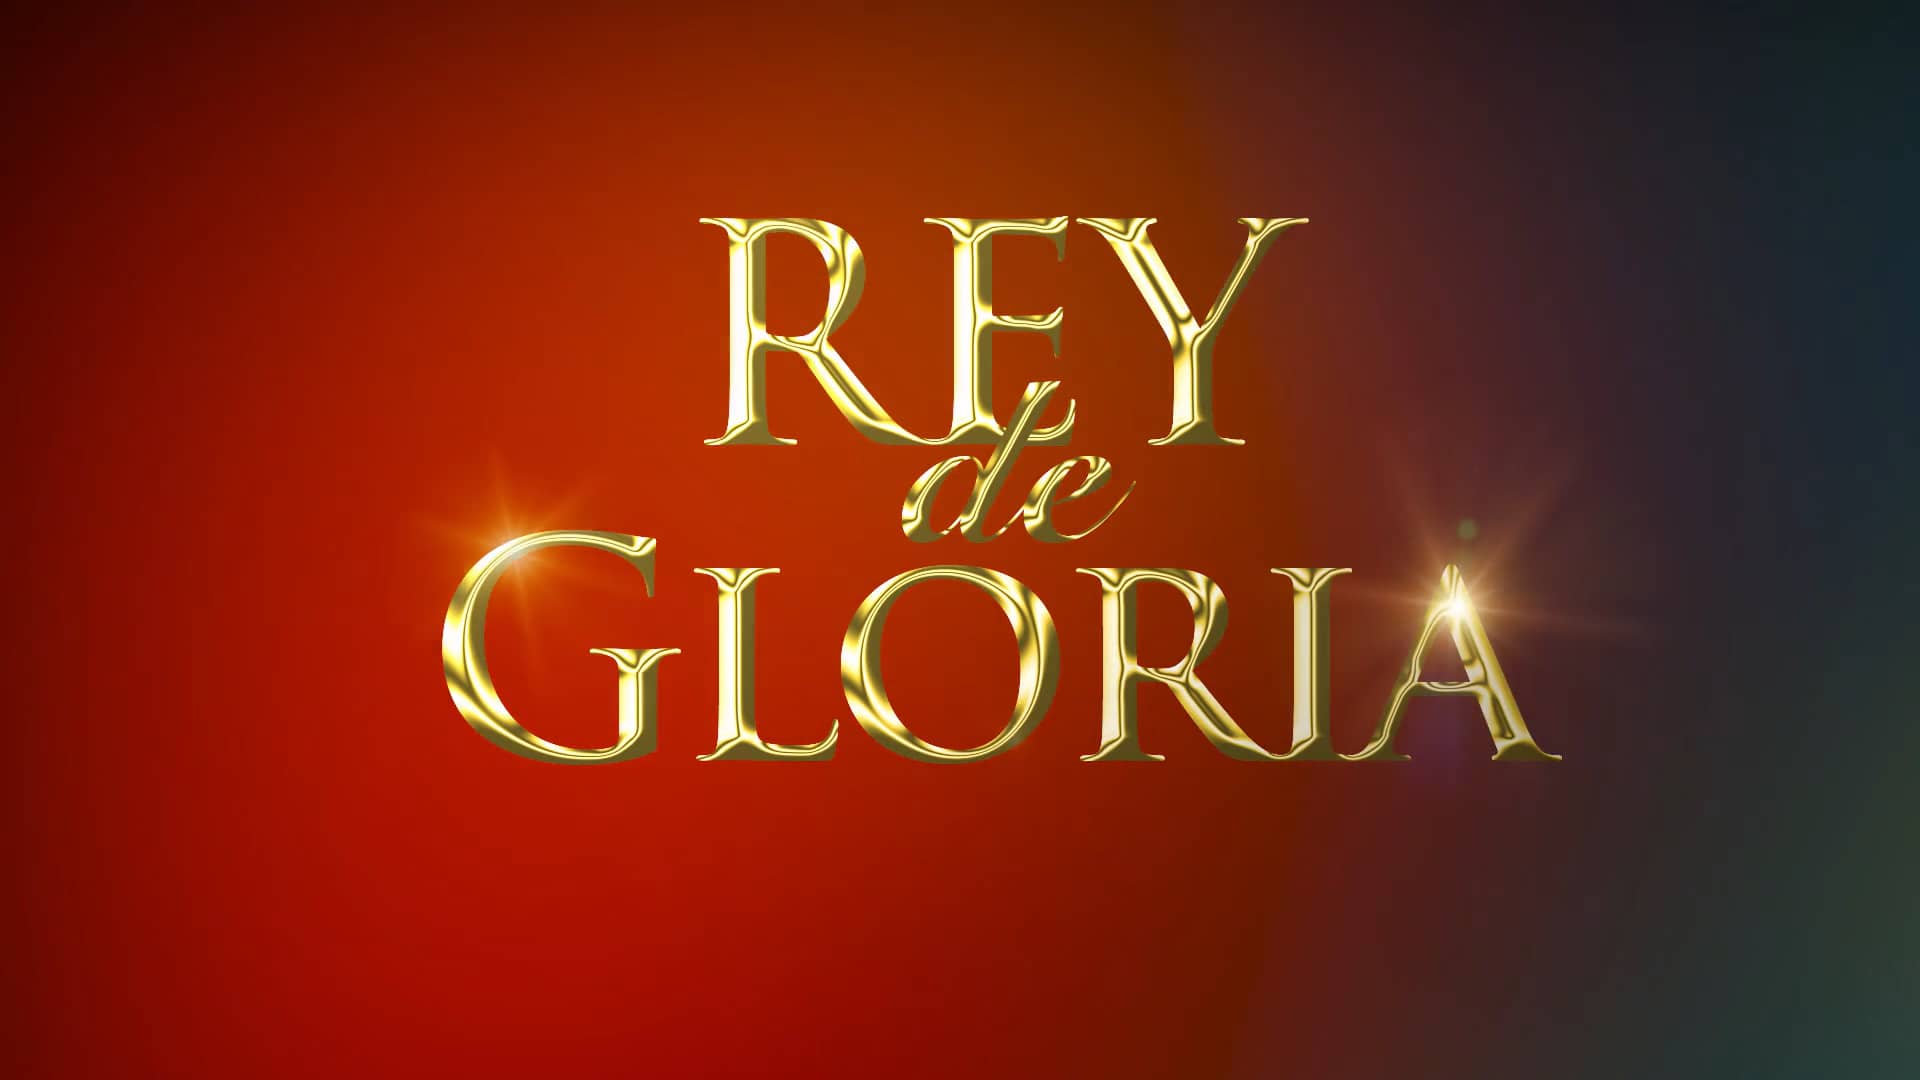 REY de GLORIA | Película completa | KING of GLORY | Spanish on Vimeo